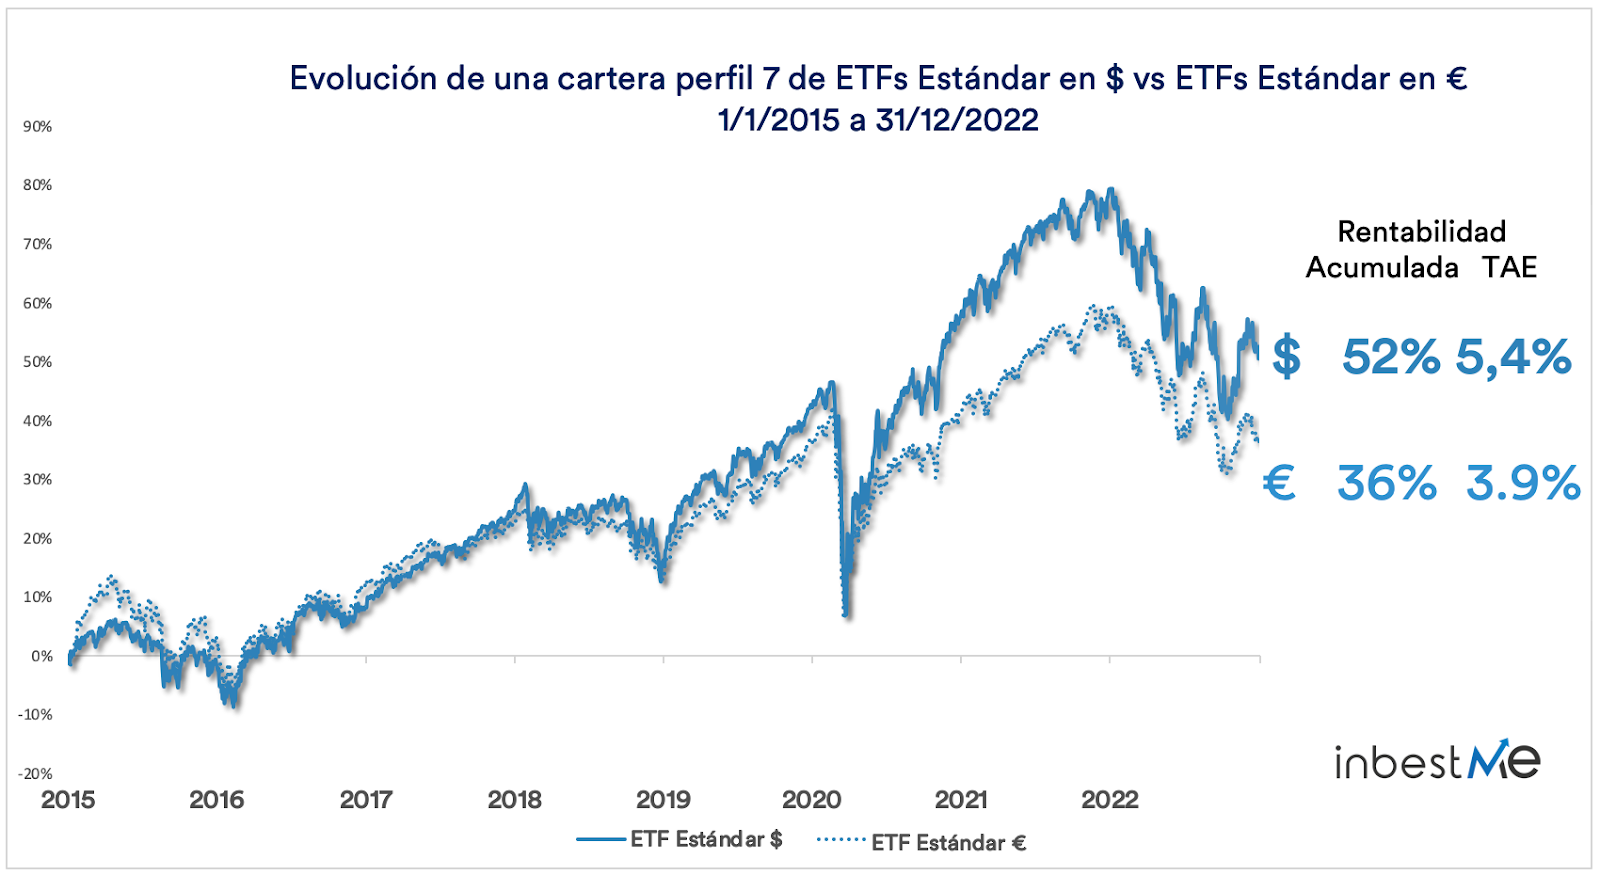 Evolución de una cartera perfil 7 de ETFs Estándar en $ vs ETFs Estándar en €
1/1/2015 a 31/12/2022
